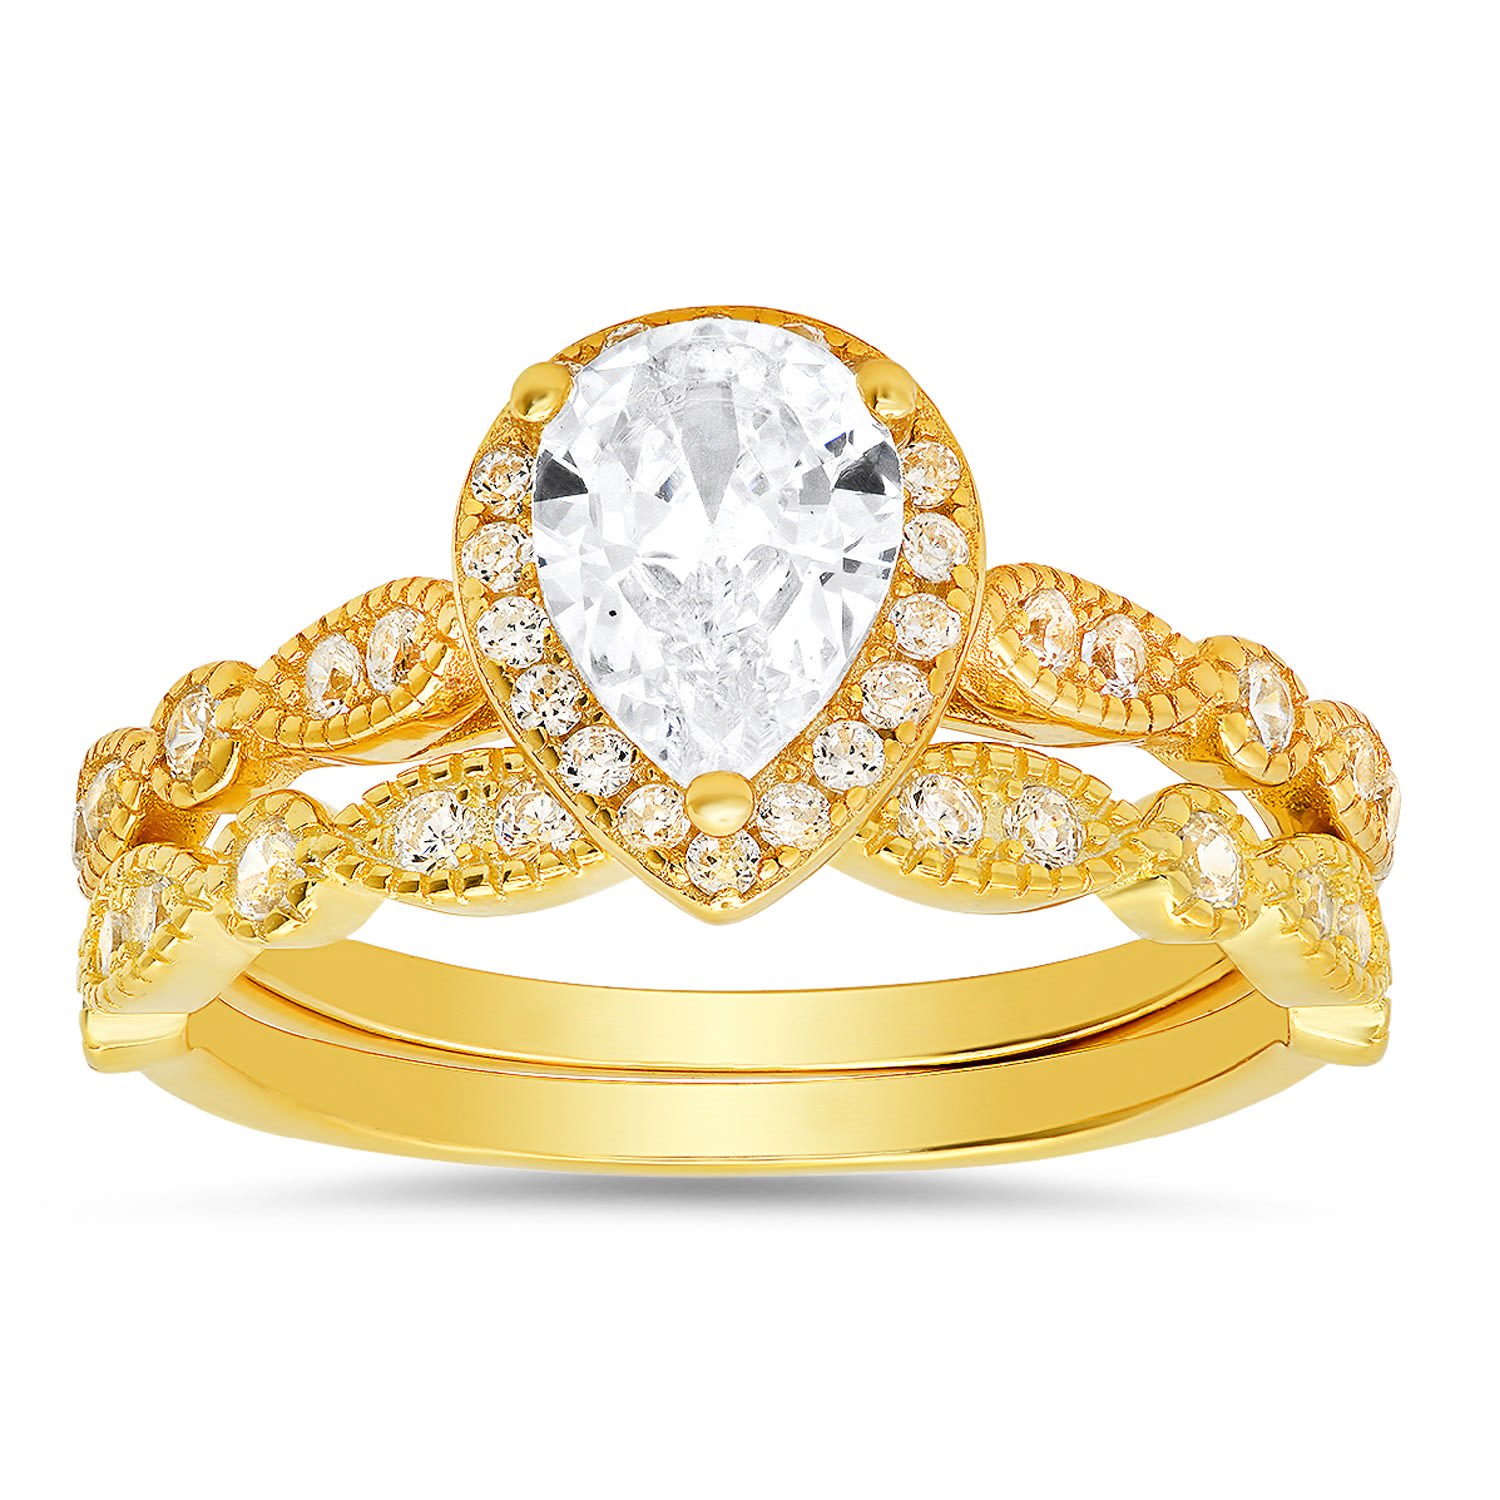 Kylie Harper Women's Gold Pear Cut Diamond Cz Stackable Ring Set